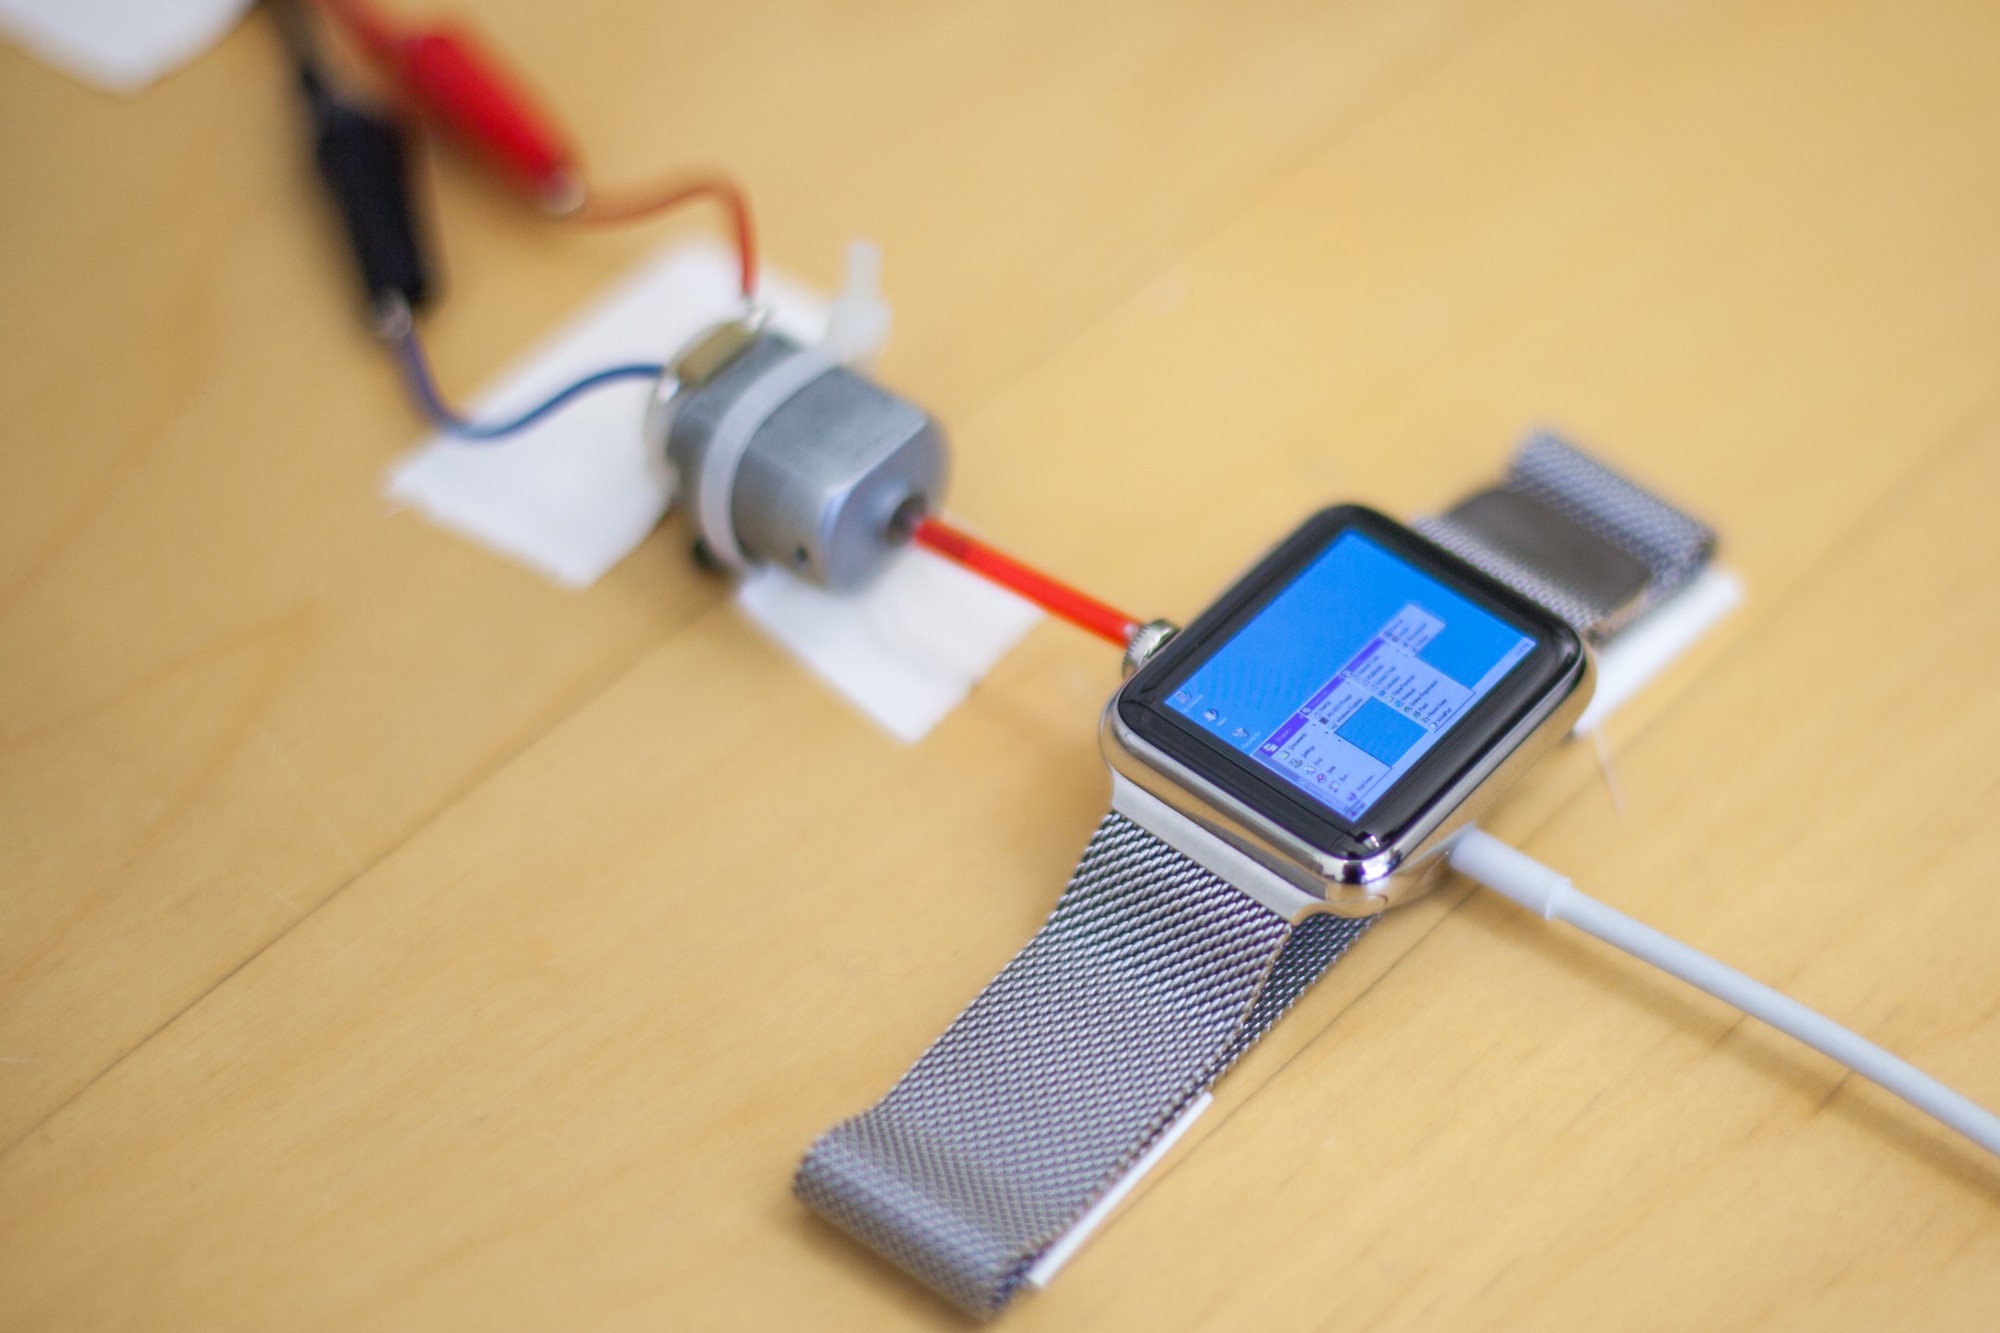 Apple Watch running Windows95